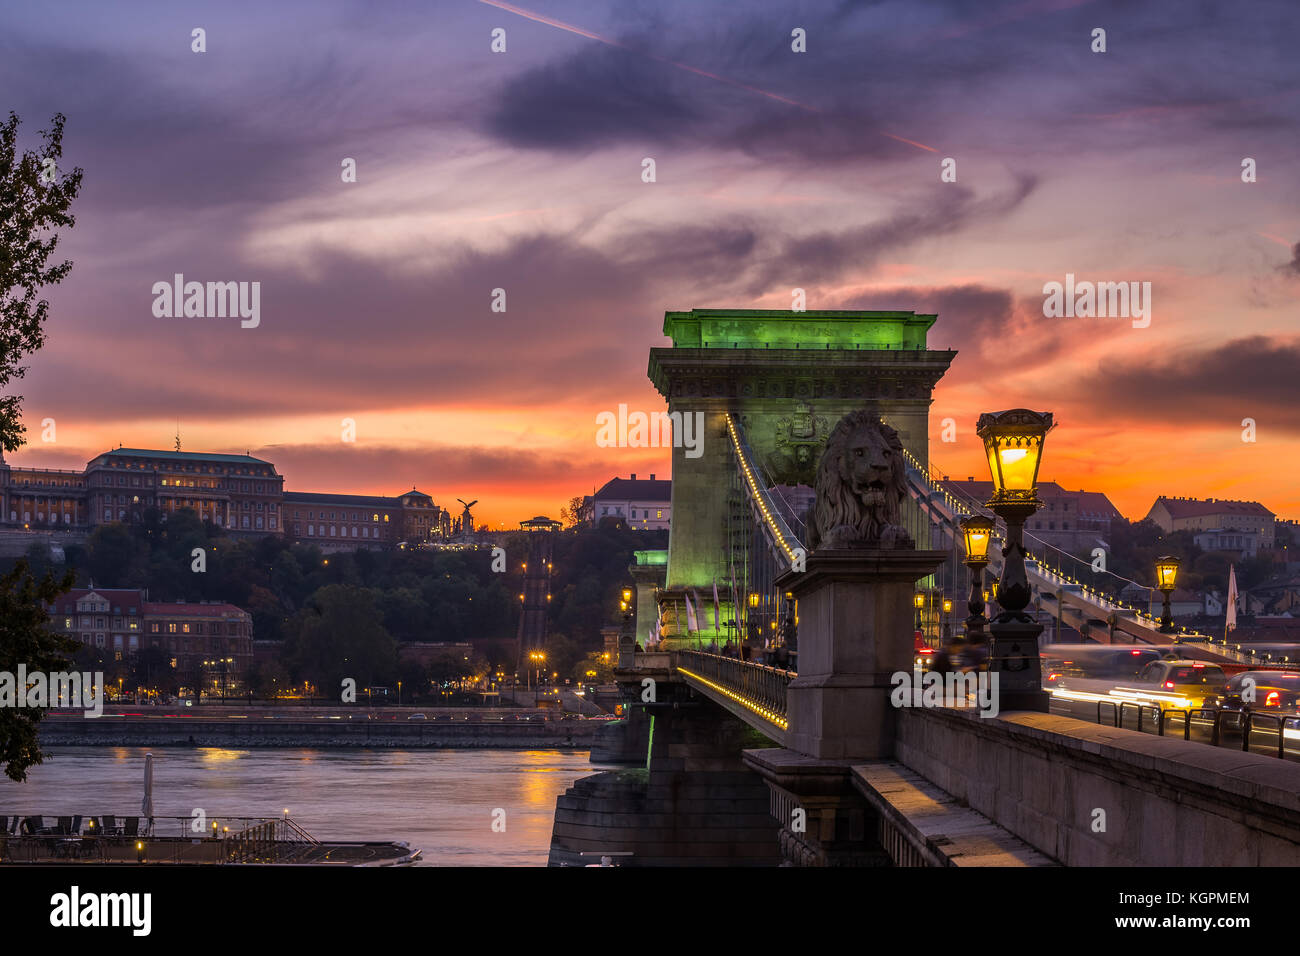 Budapest, Hungary - Beautiful dramatic golden sunset at Szechenyi Chain Bridge in green lights with Buda Castle Royal Palace at background Stock Photo